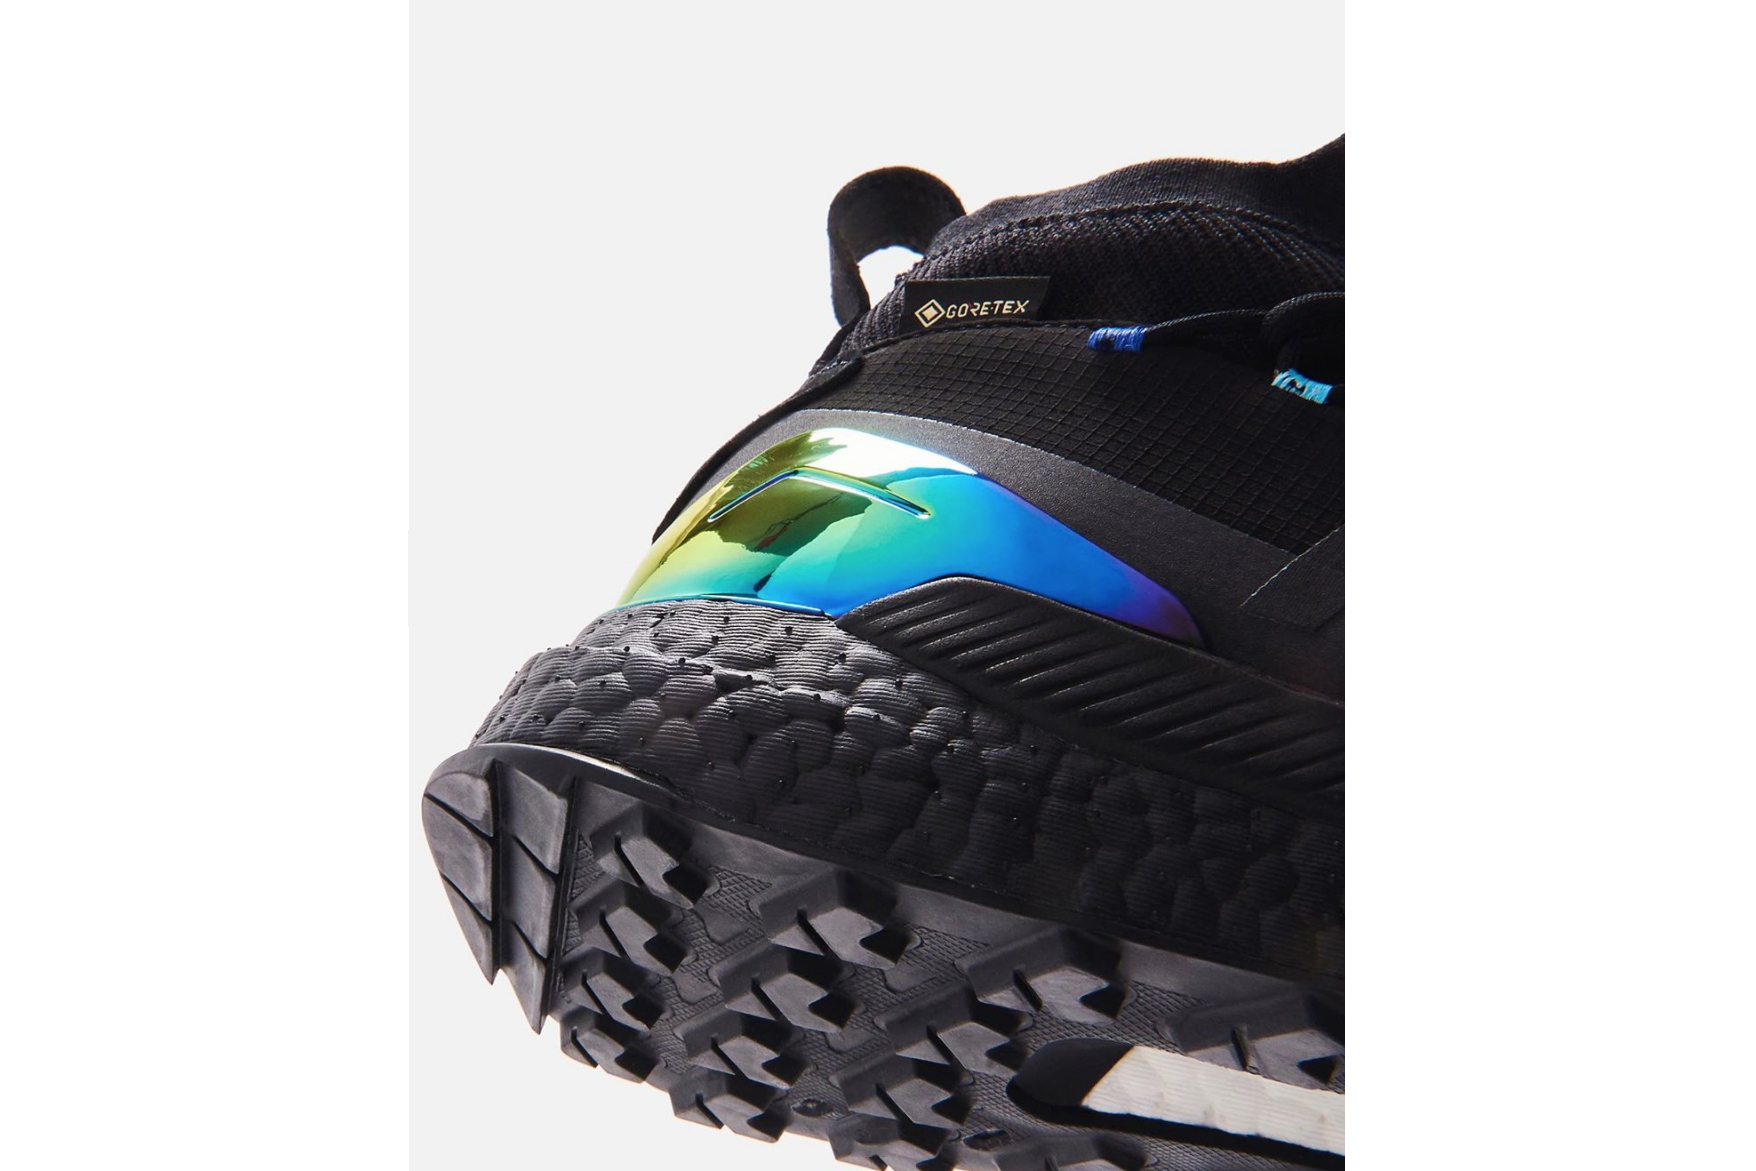 https://hypebeast.com/image/2019/12/ronnie-fieg-adidas-terrex-rainbow-teaser-2.jpg